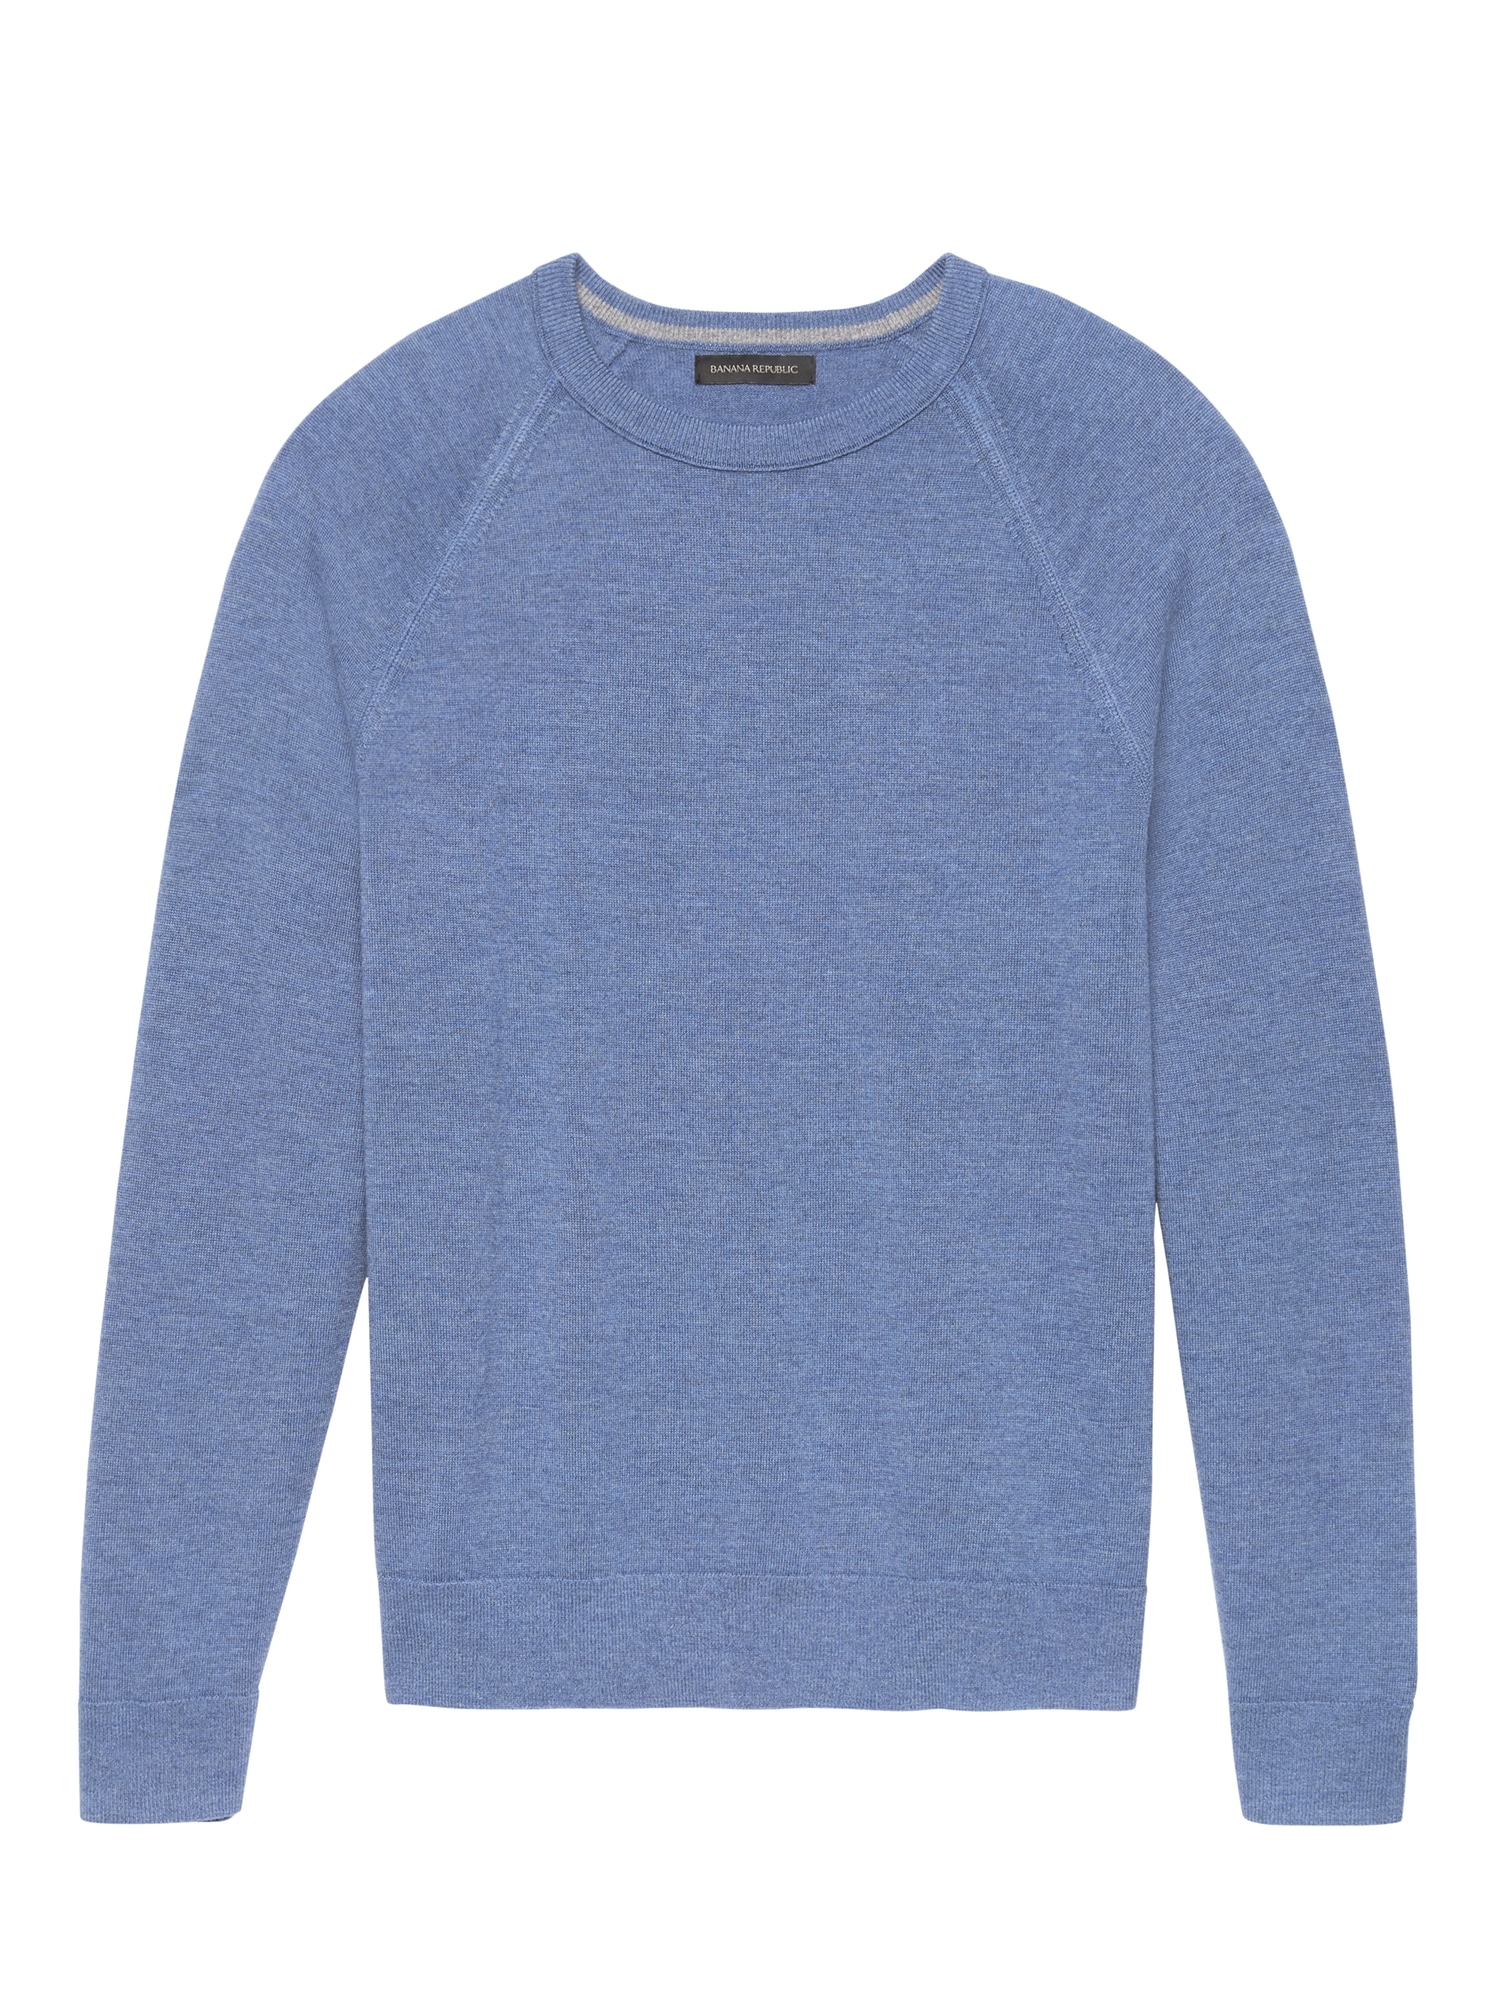 Extra-Fine Italian Merino Wool Crew-Neck Raglan Sweater